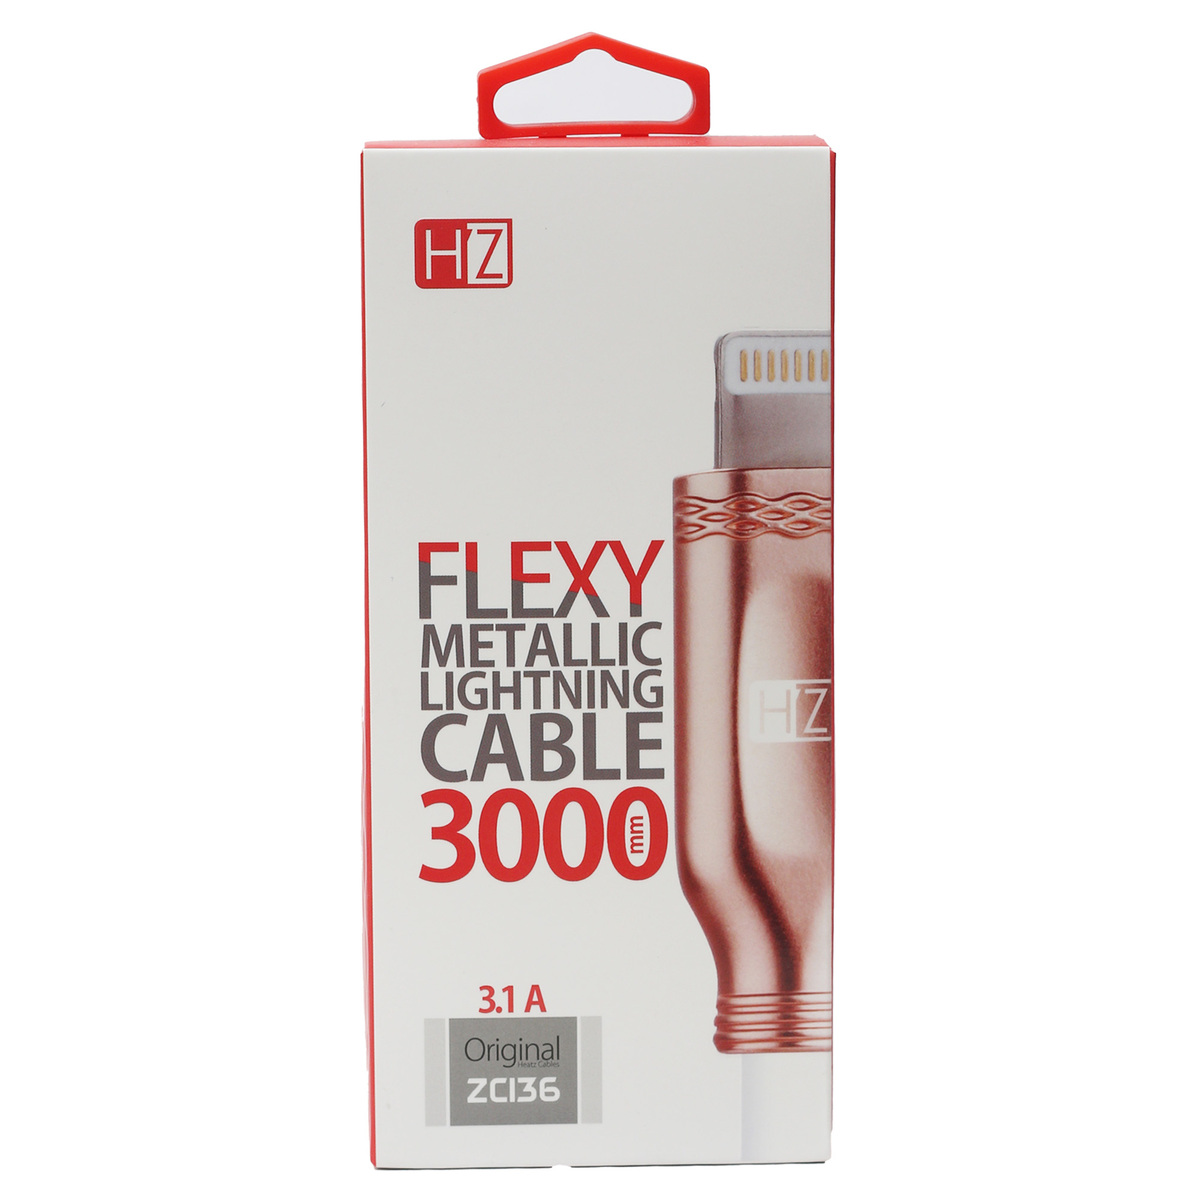 Heatz Flexy Lightning Cable ZCI36 3 Meter